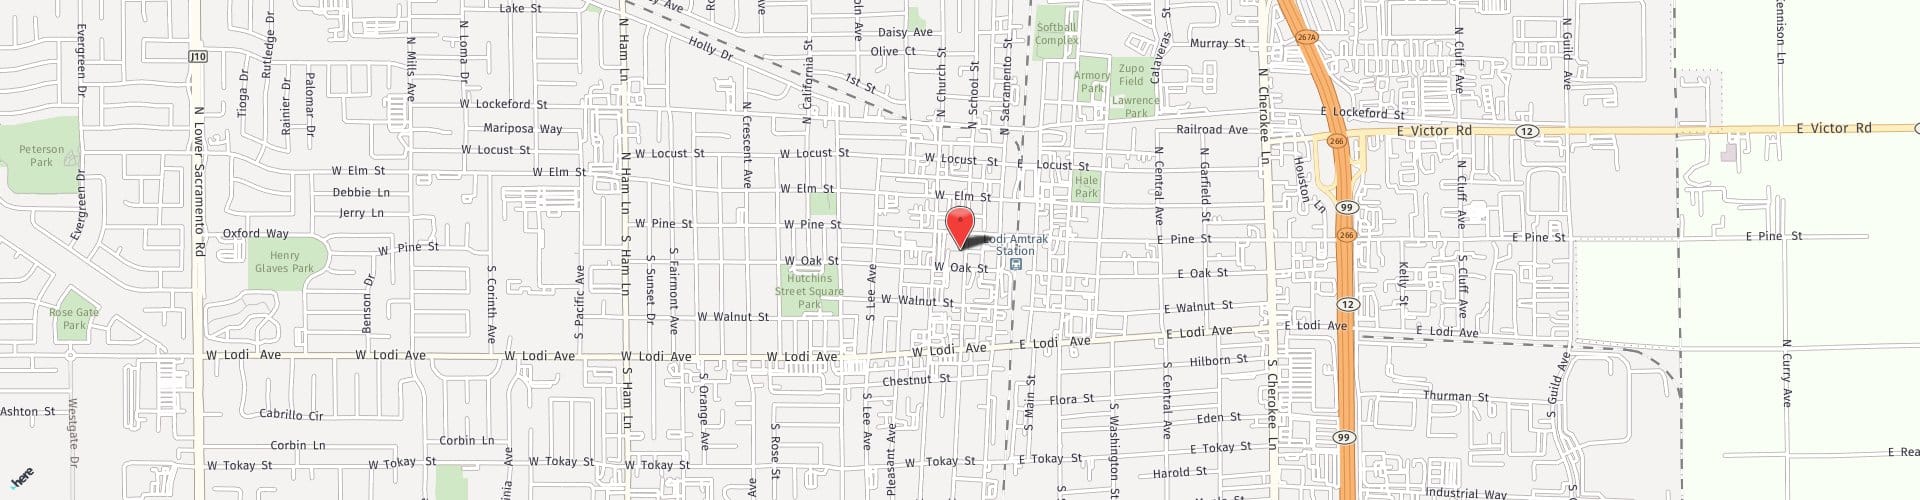 Location Map: 19 Downtown Mall Lodi, CA 95420 United States